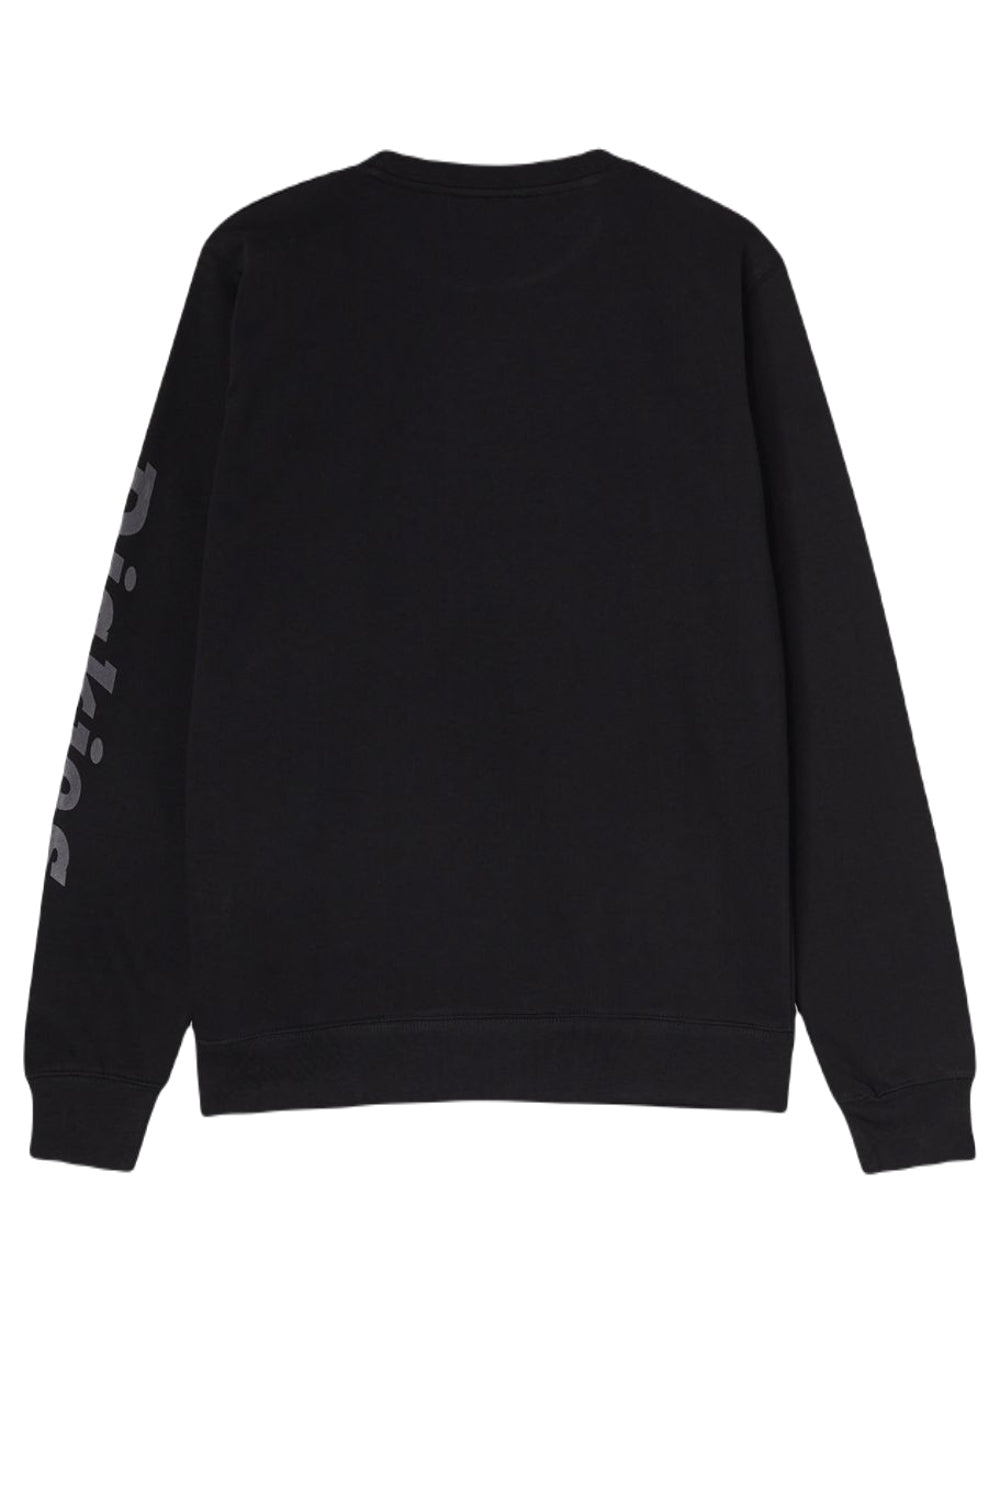 Dickies Okemo Graphic Sweatshirt in Black